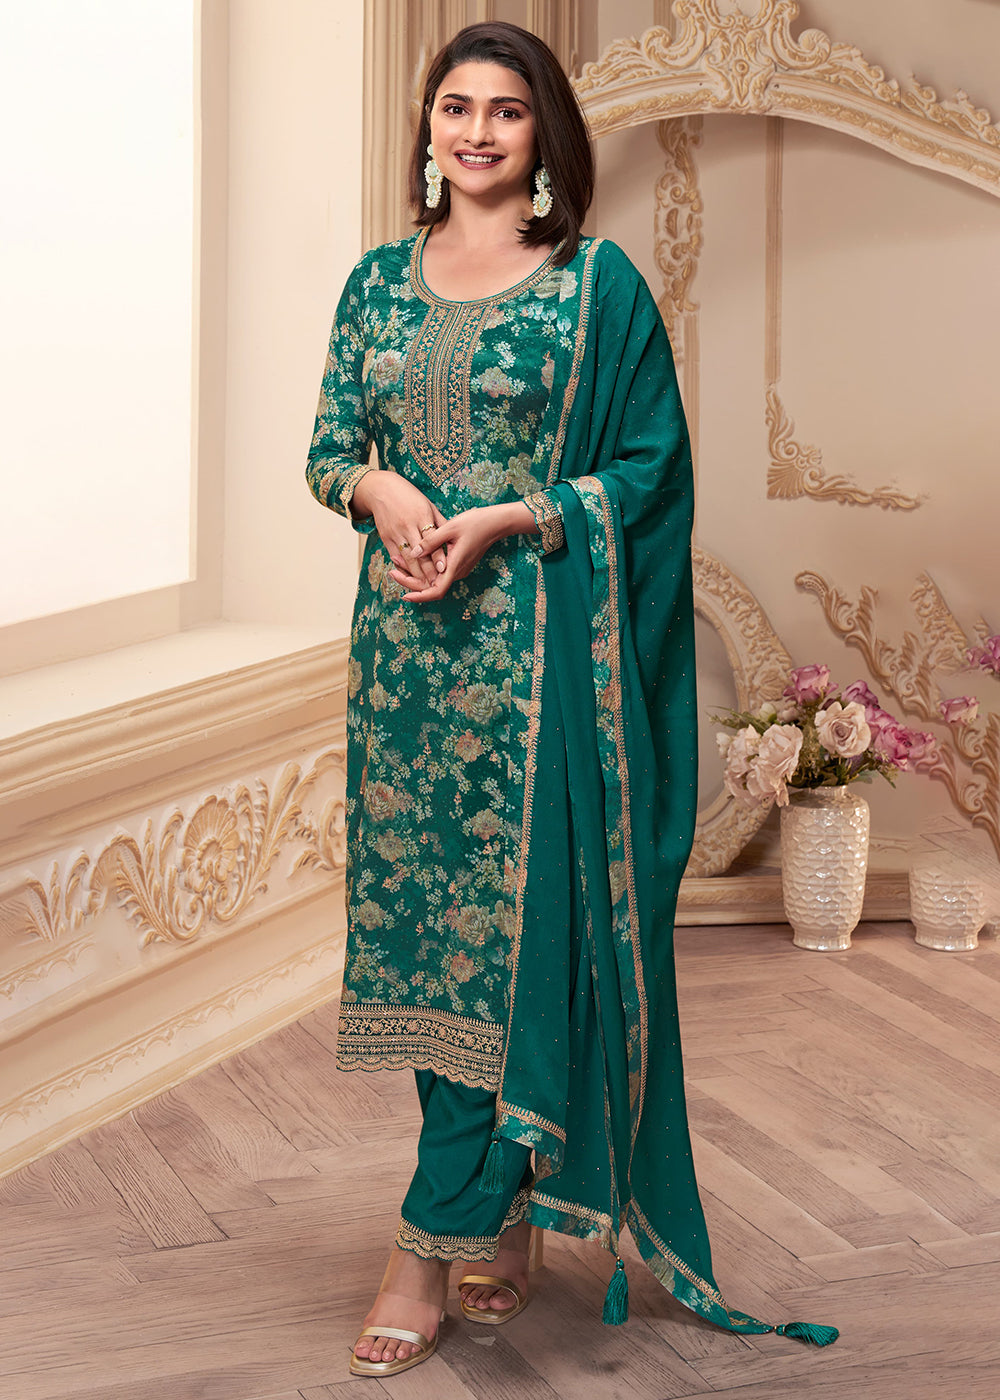 Buy Now Green Digital Printed Chinnon Festive Salwar Kameez Online in USA, UK, Canada, Germany, Australia & Worldwide at Empress Clothing. 